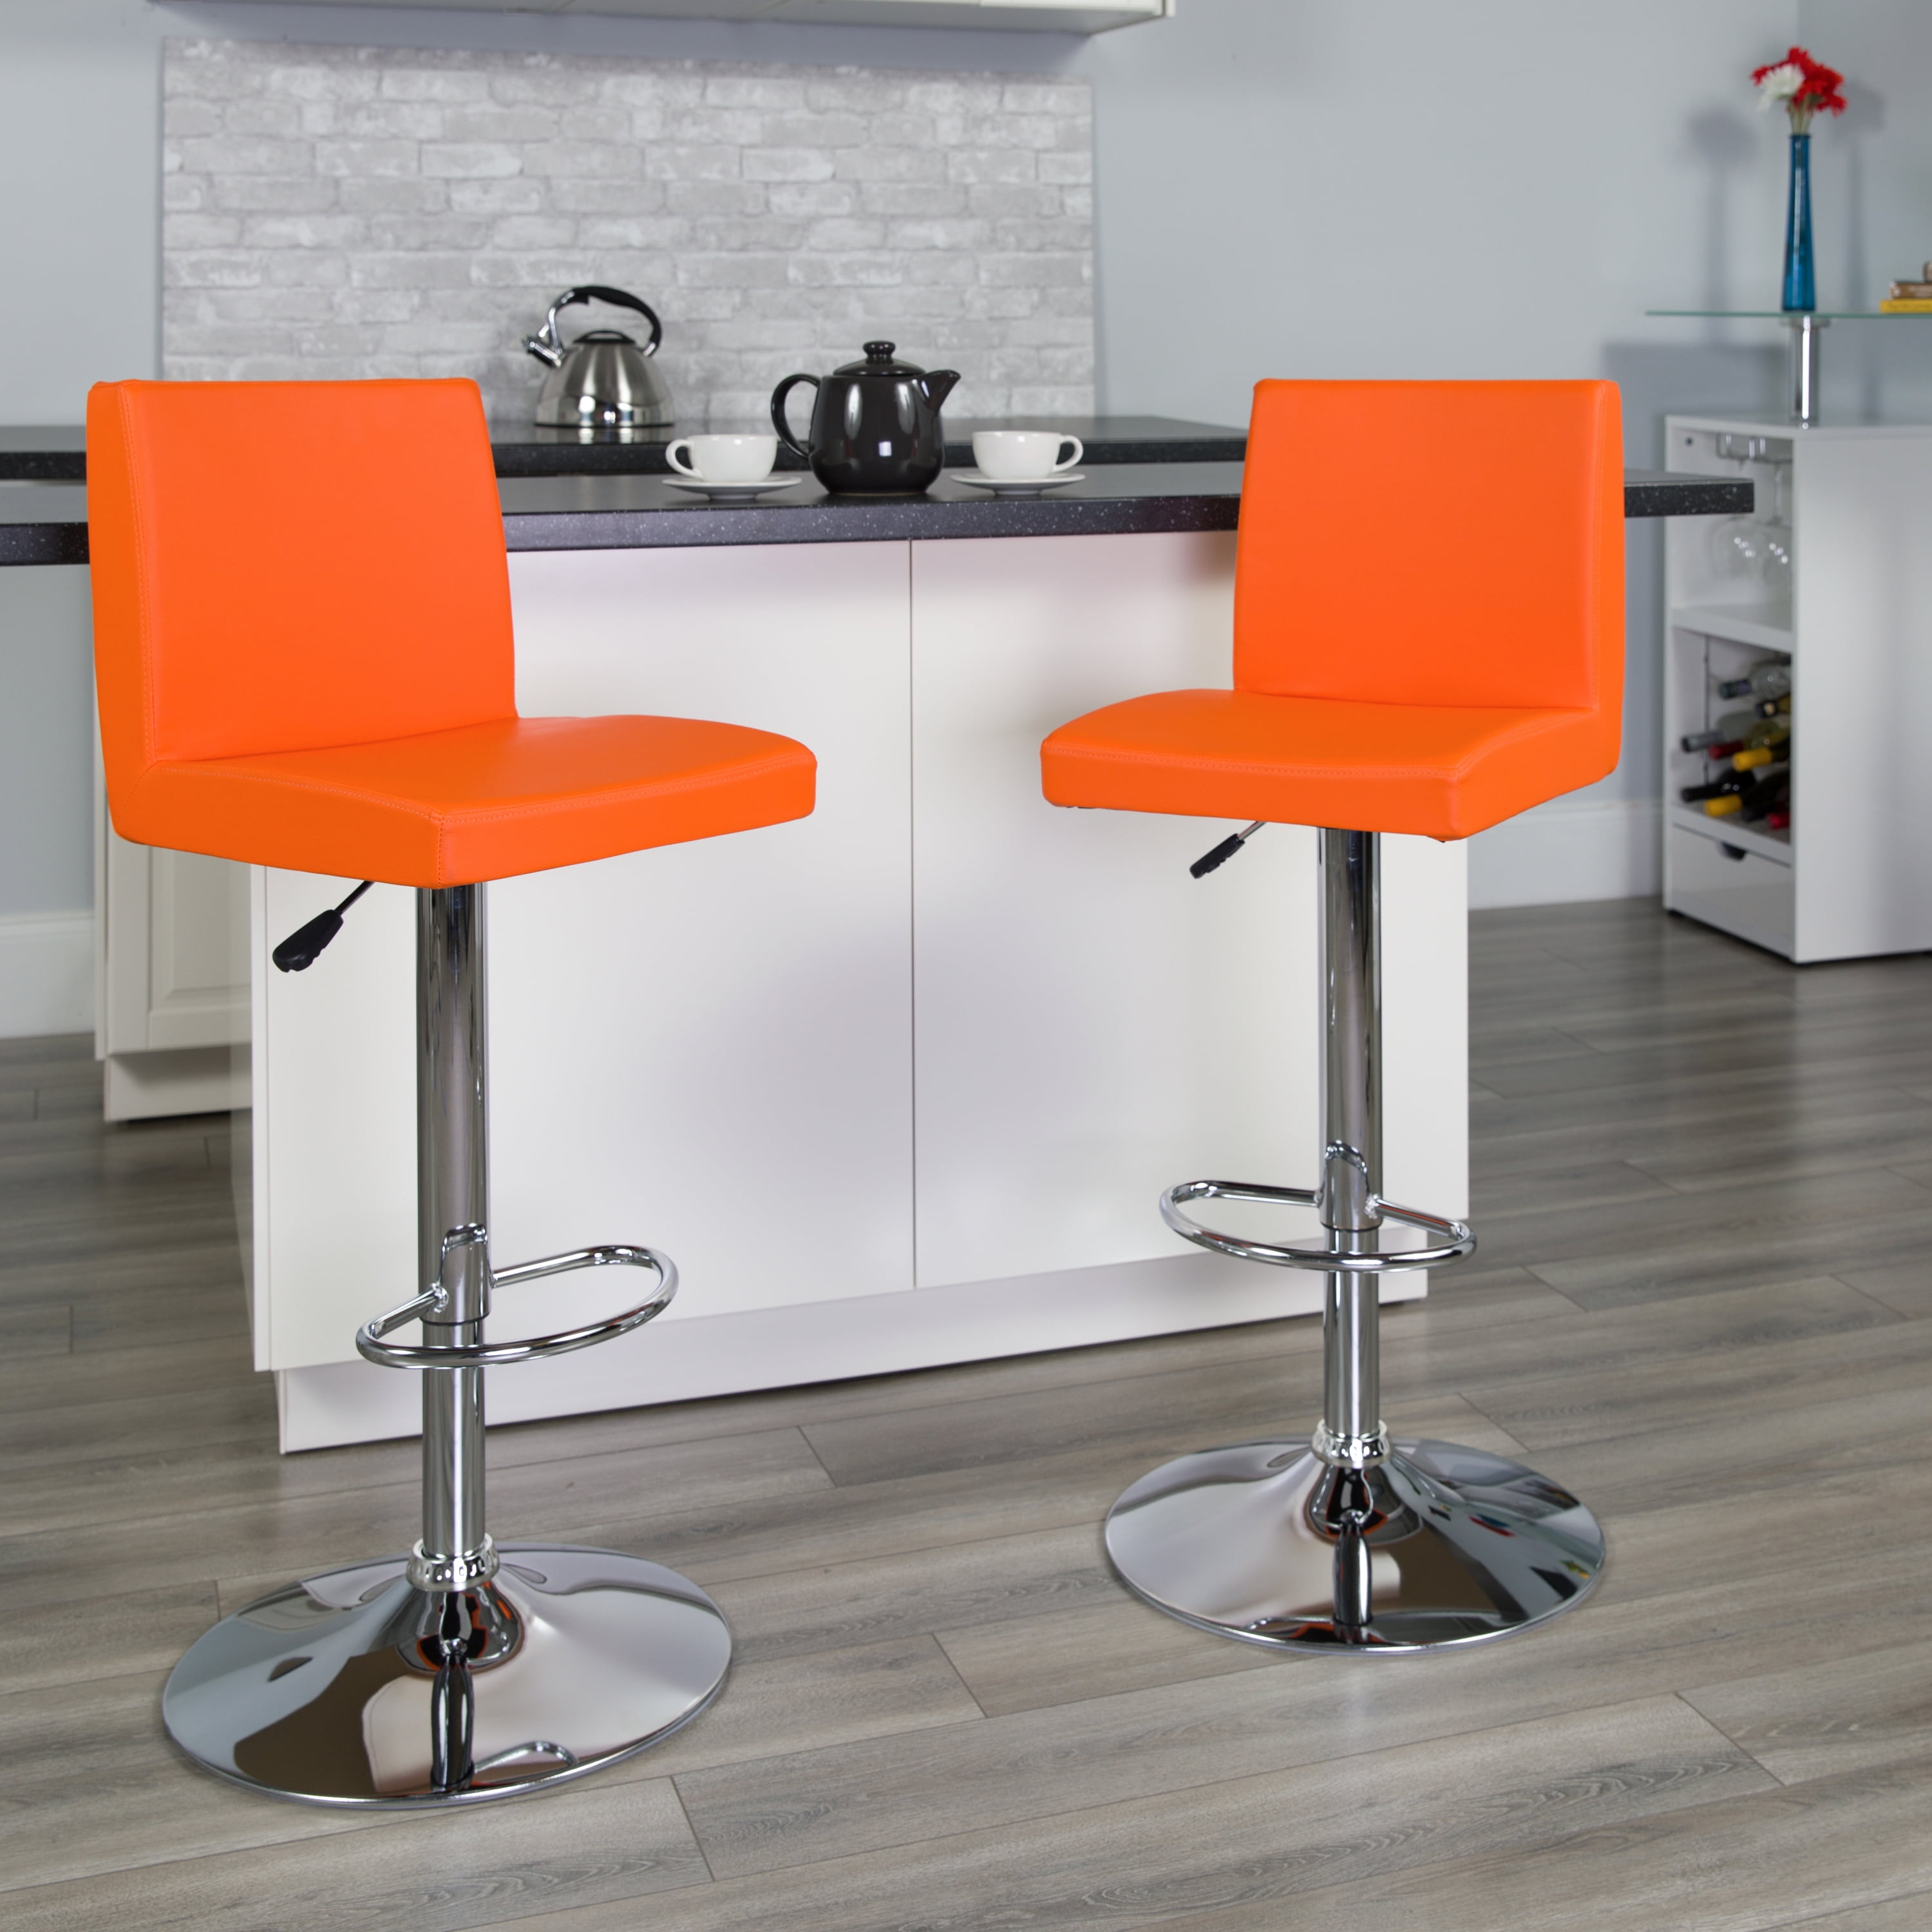 Contemporary Orange Vinyl Adjustable Height Barstool with Chrome Base